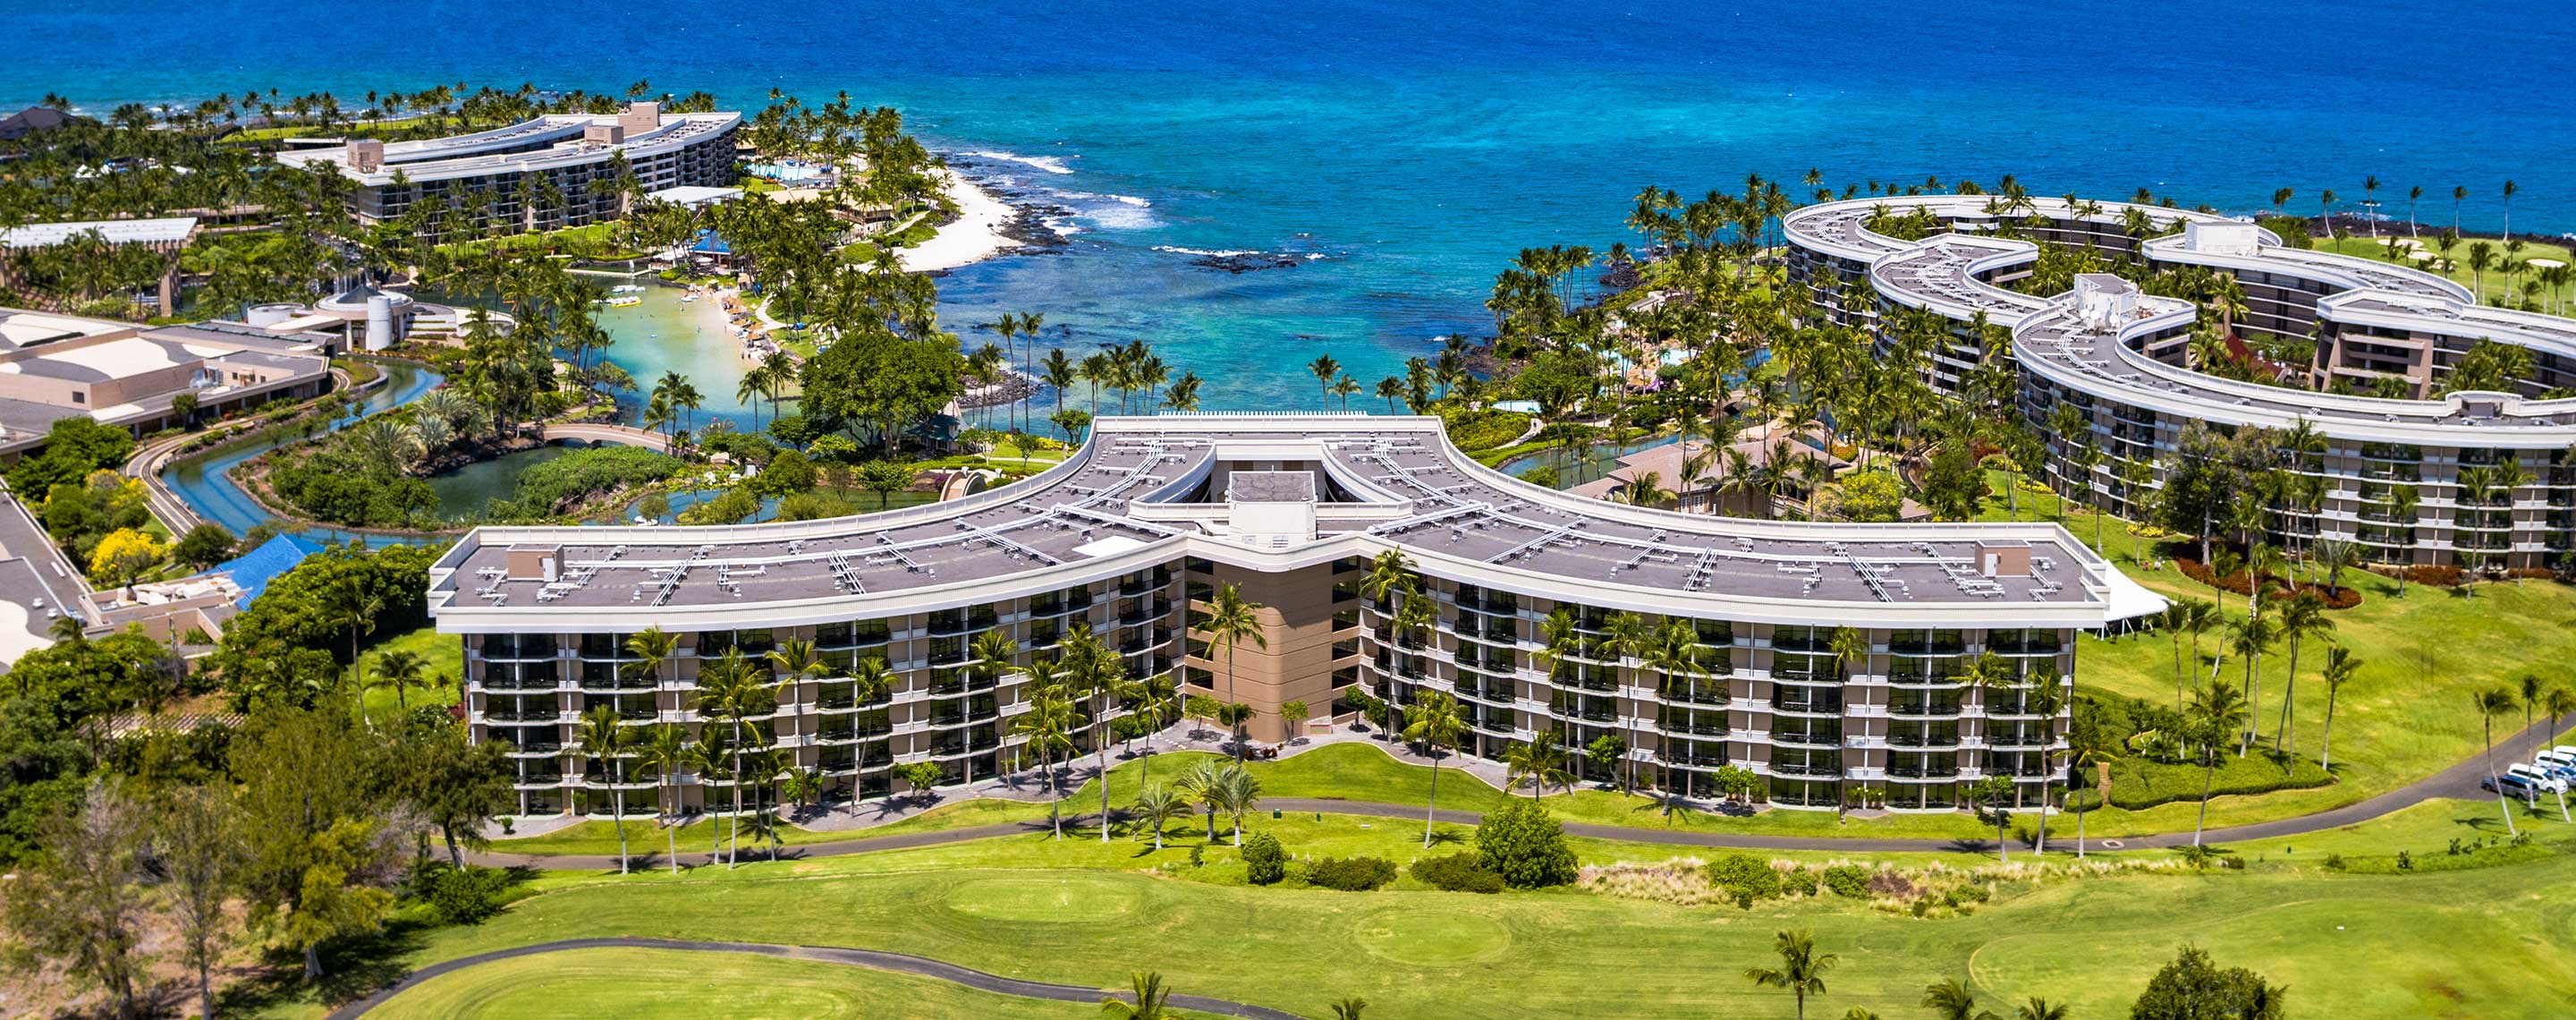 Save Up to 30 Percent at Hilton Waikoloa Village Resort 2018 — But